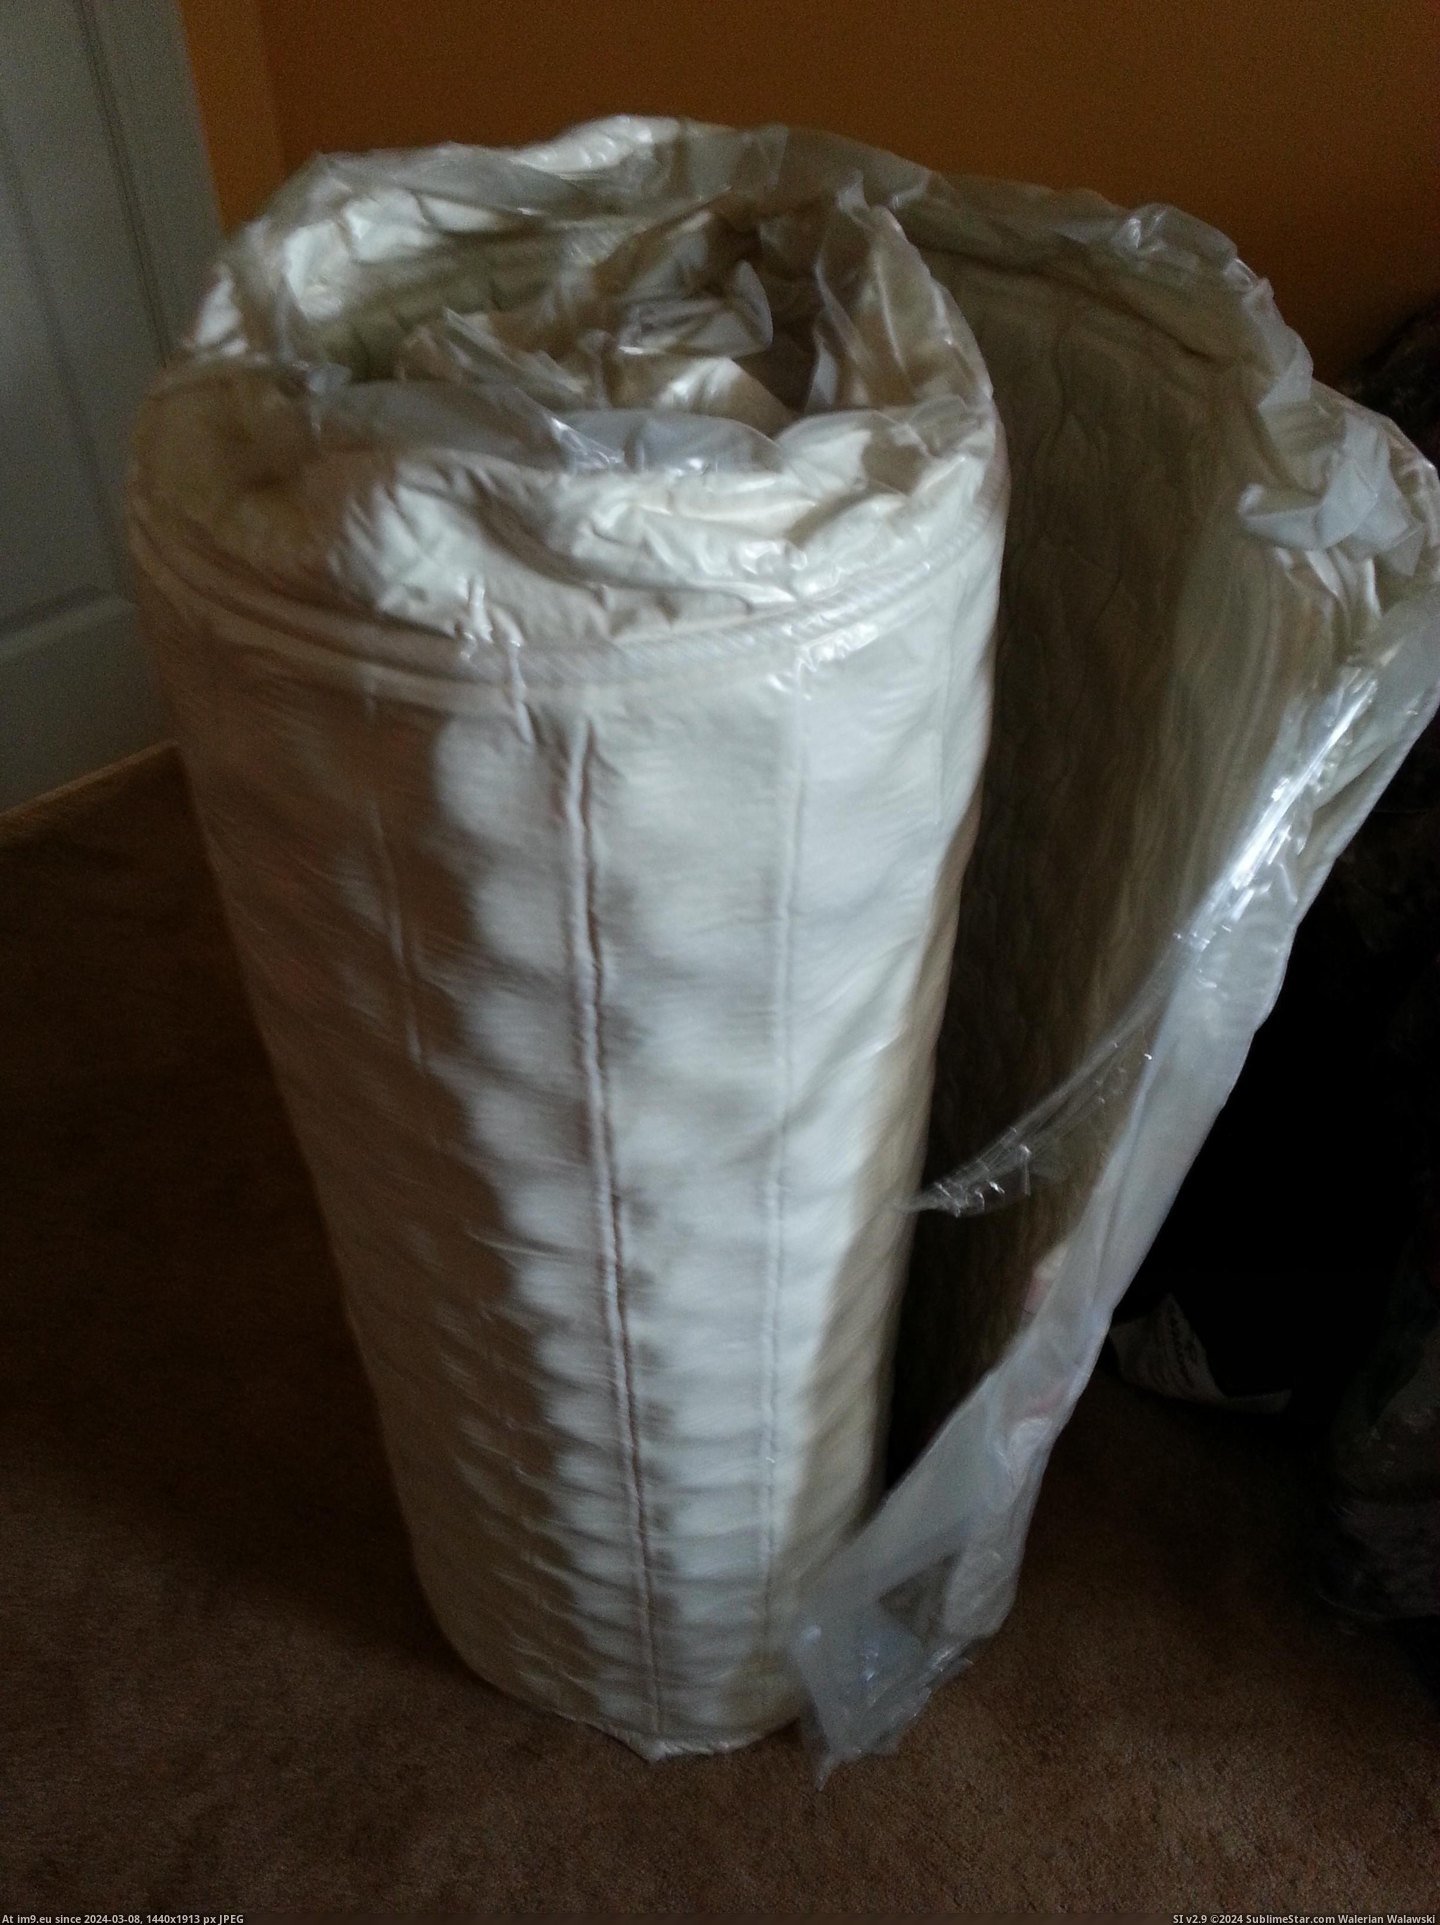 #Broke #Bag #Vacuum #Duffle #Unrolled #Seal #Mattress [Mildlyinteresting] Got a mattress in a duffle bag today, unrolled it and broke the vacuum seal 2 Pic. (Obraz z album My r/MILDLYINTERESTING favs))